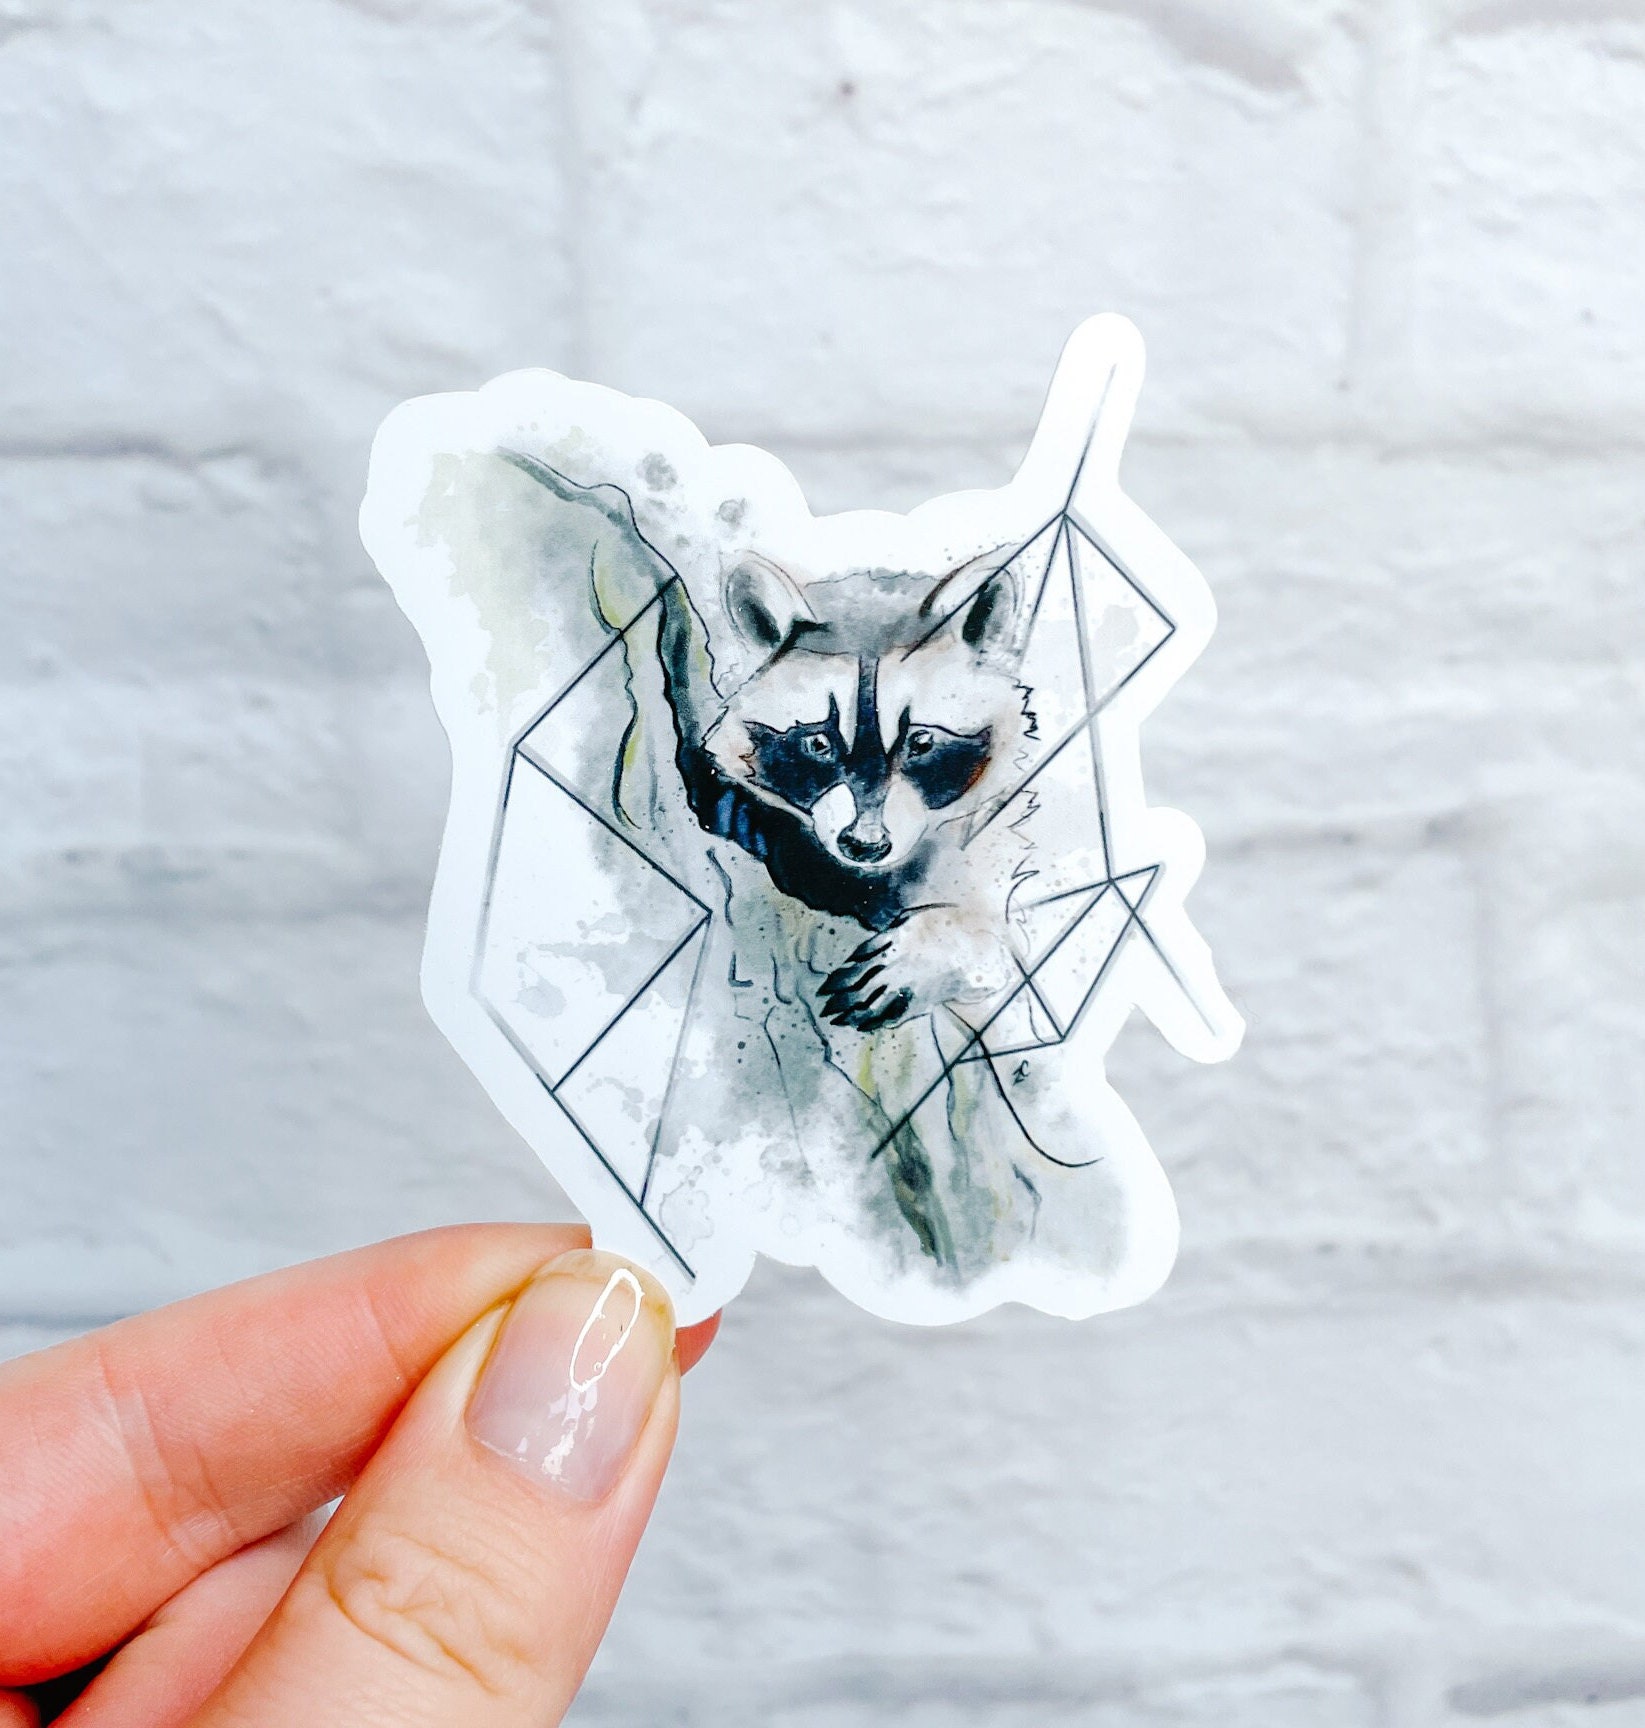 Raccoon Sticker Sheet WATERPROOF // Cute Raccoon Art Gift 